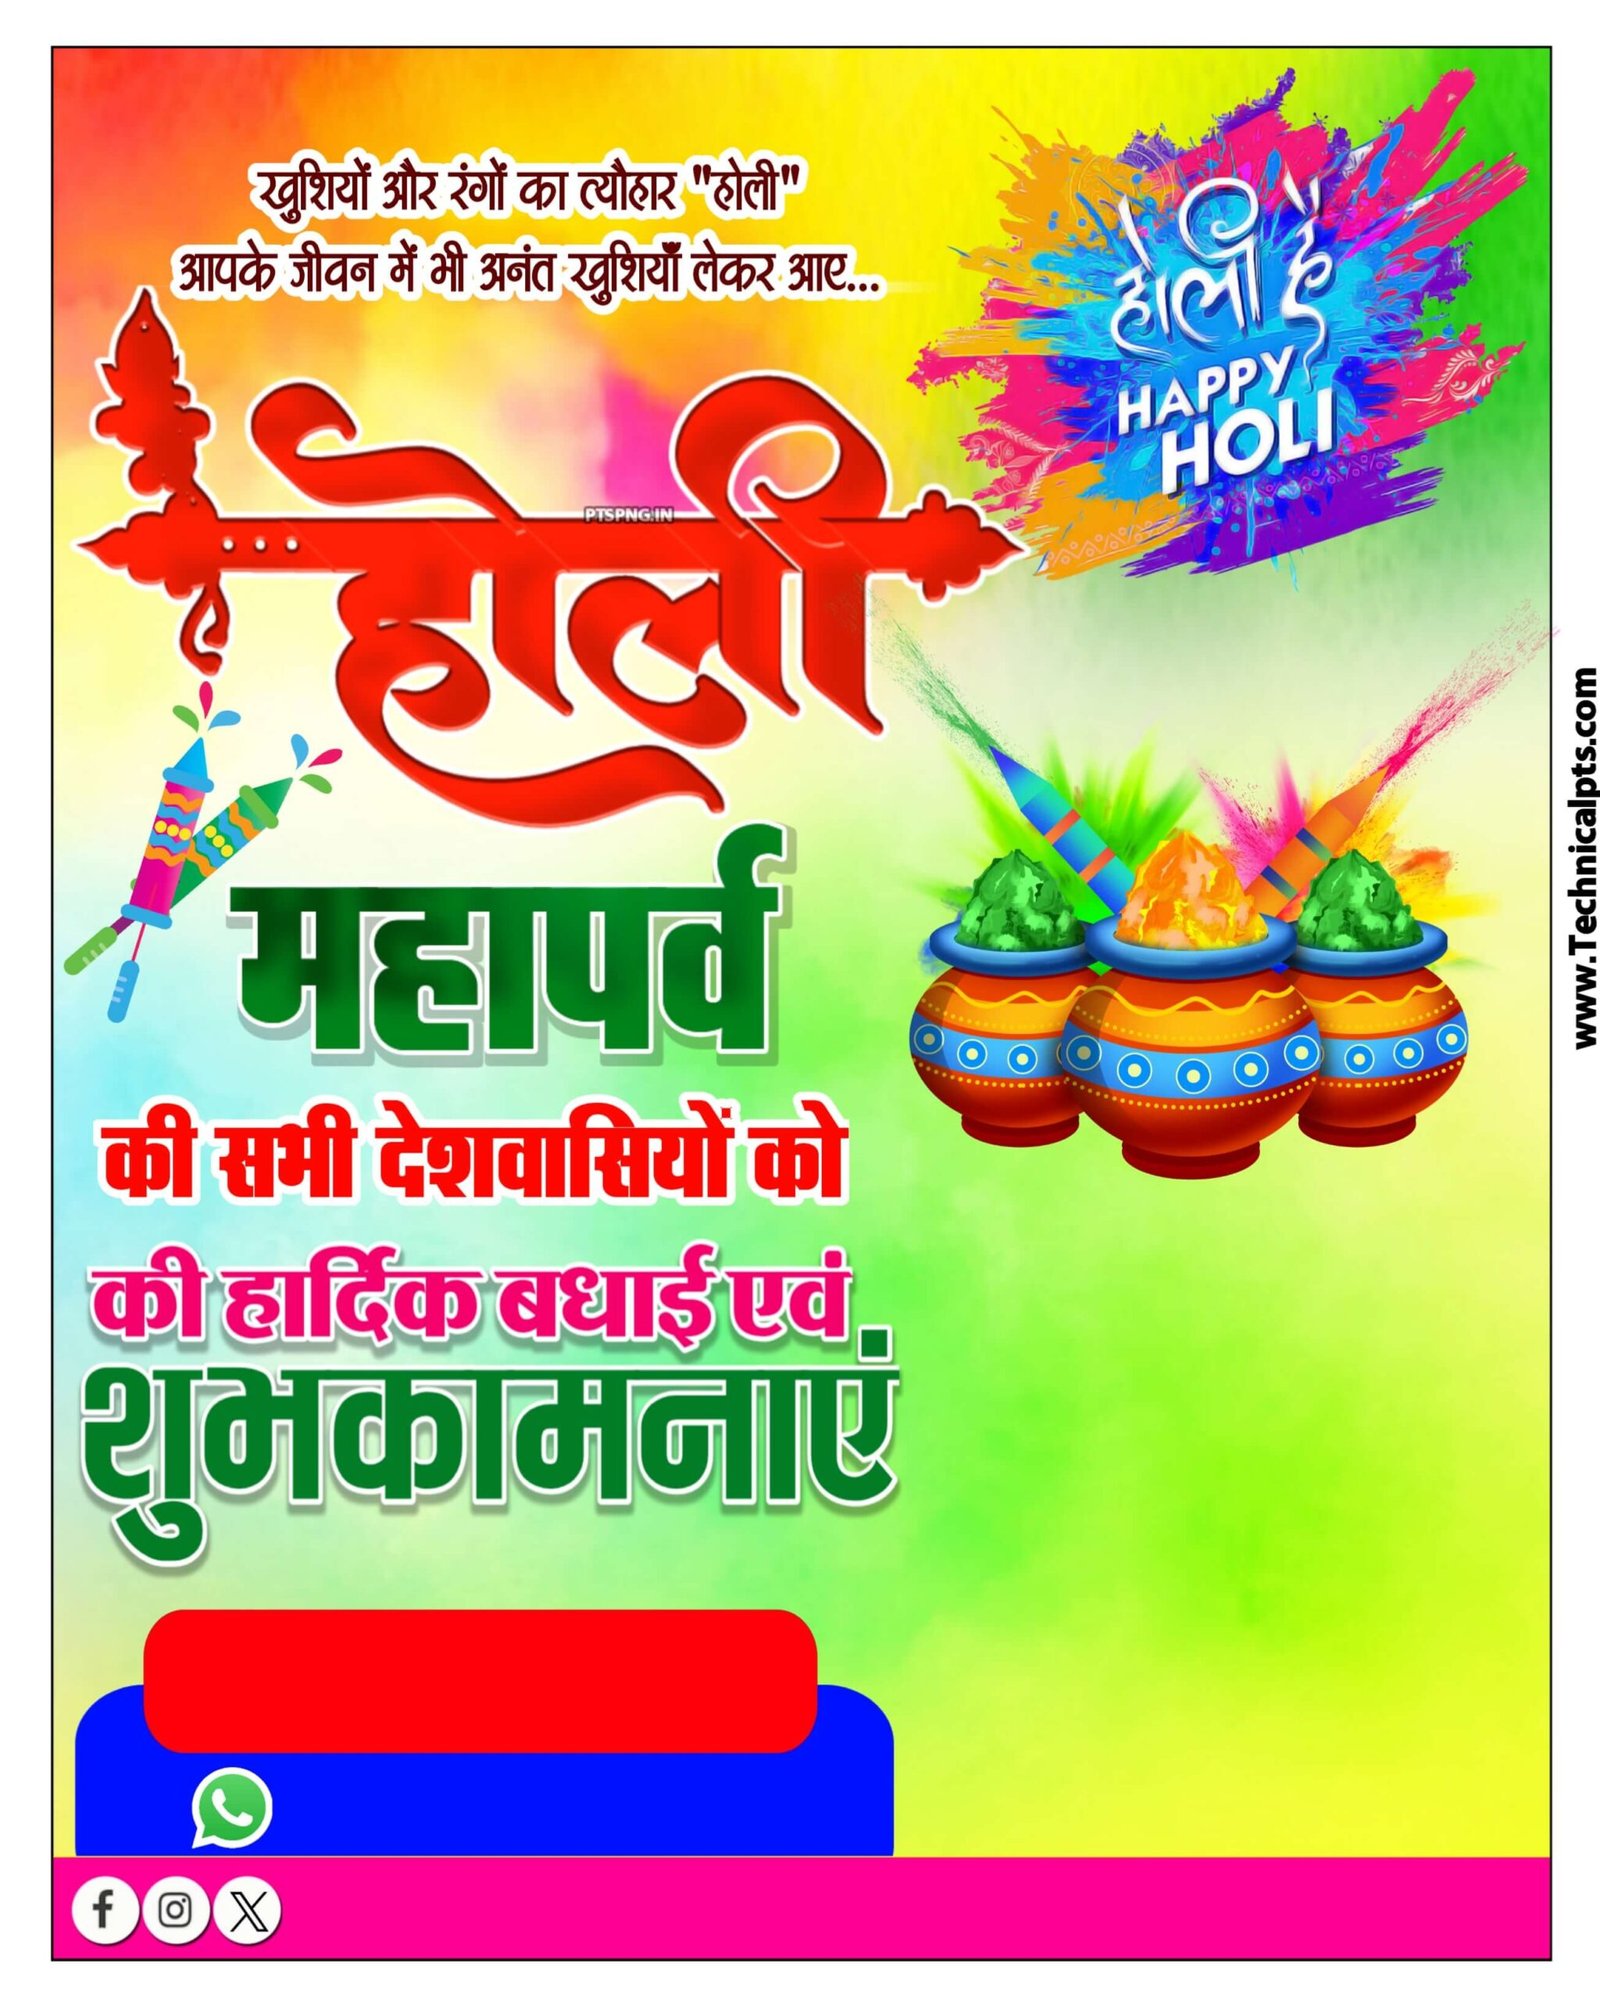 Happy holi banner editing background images| Holi poster design background png download